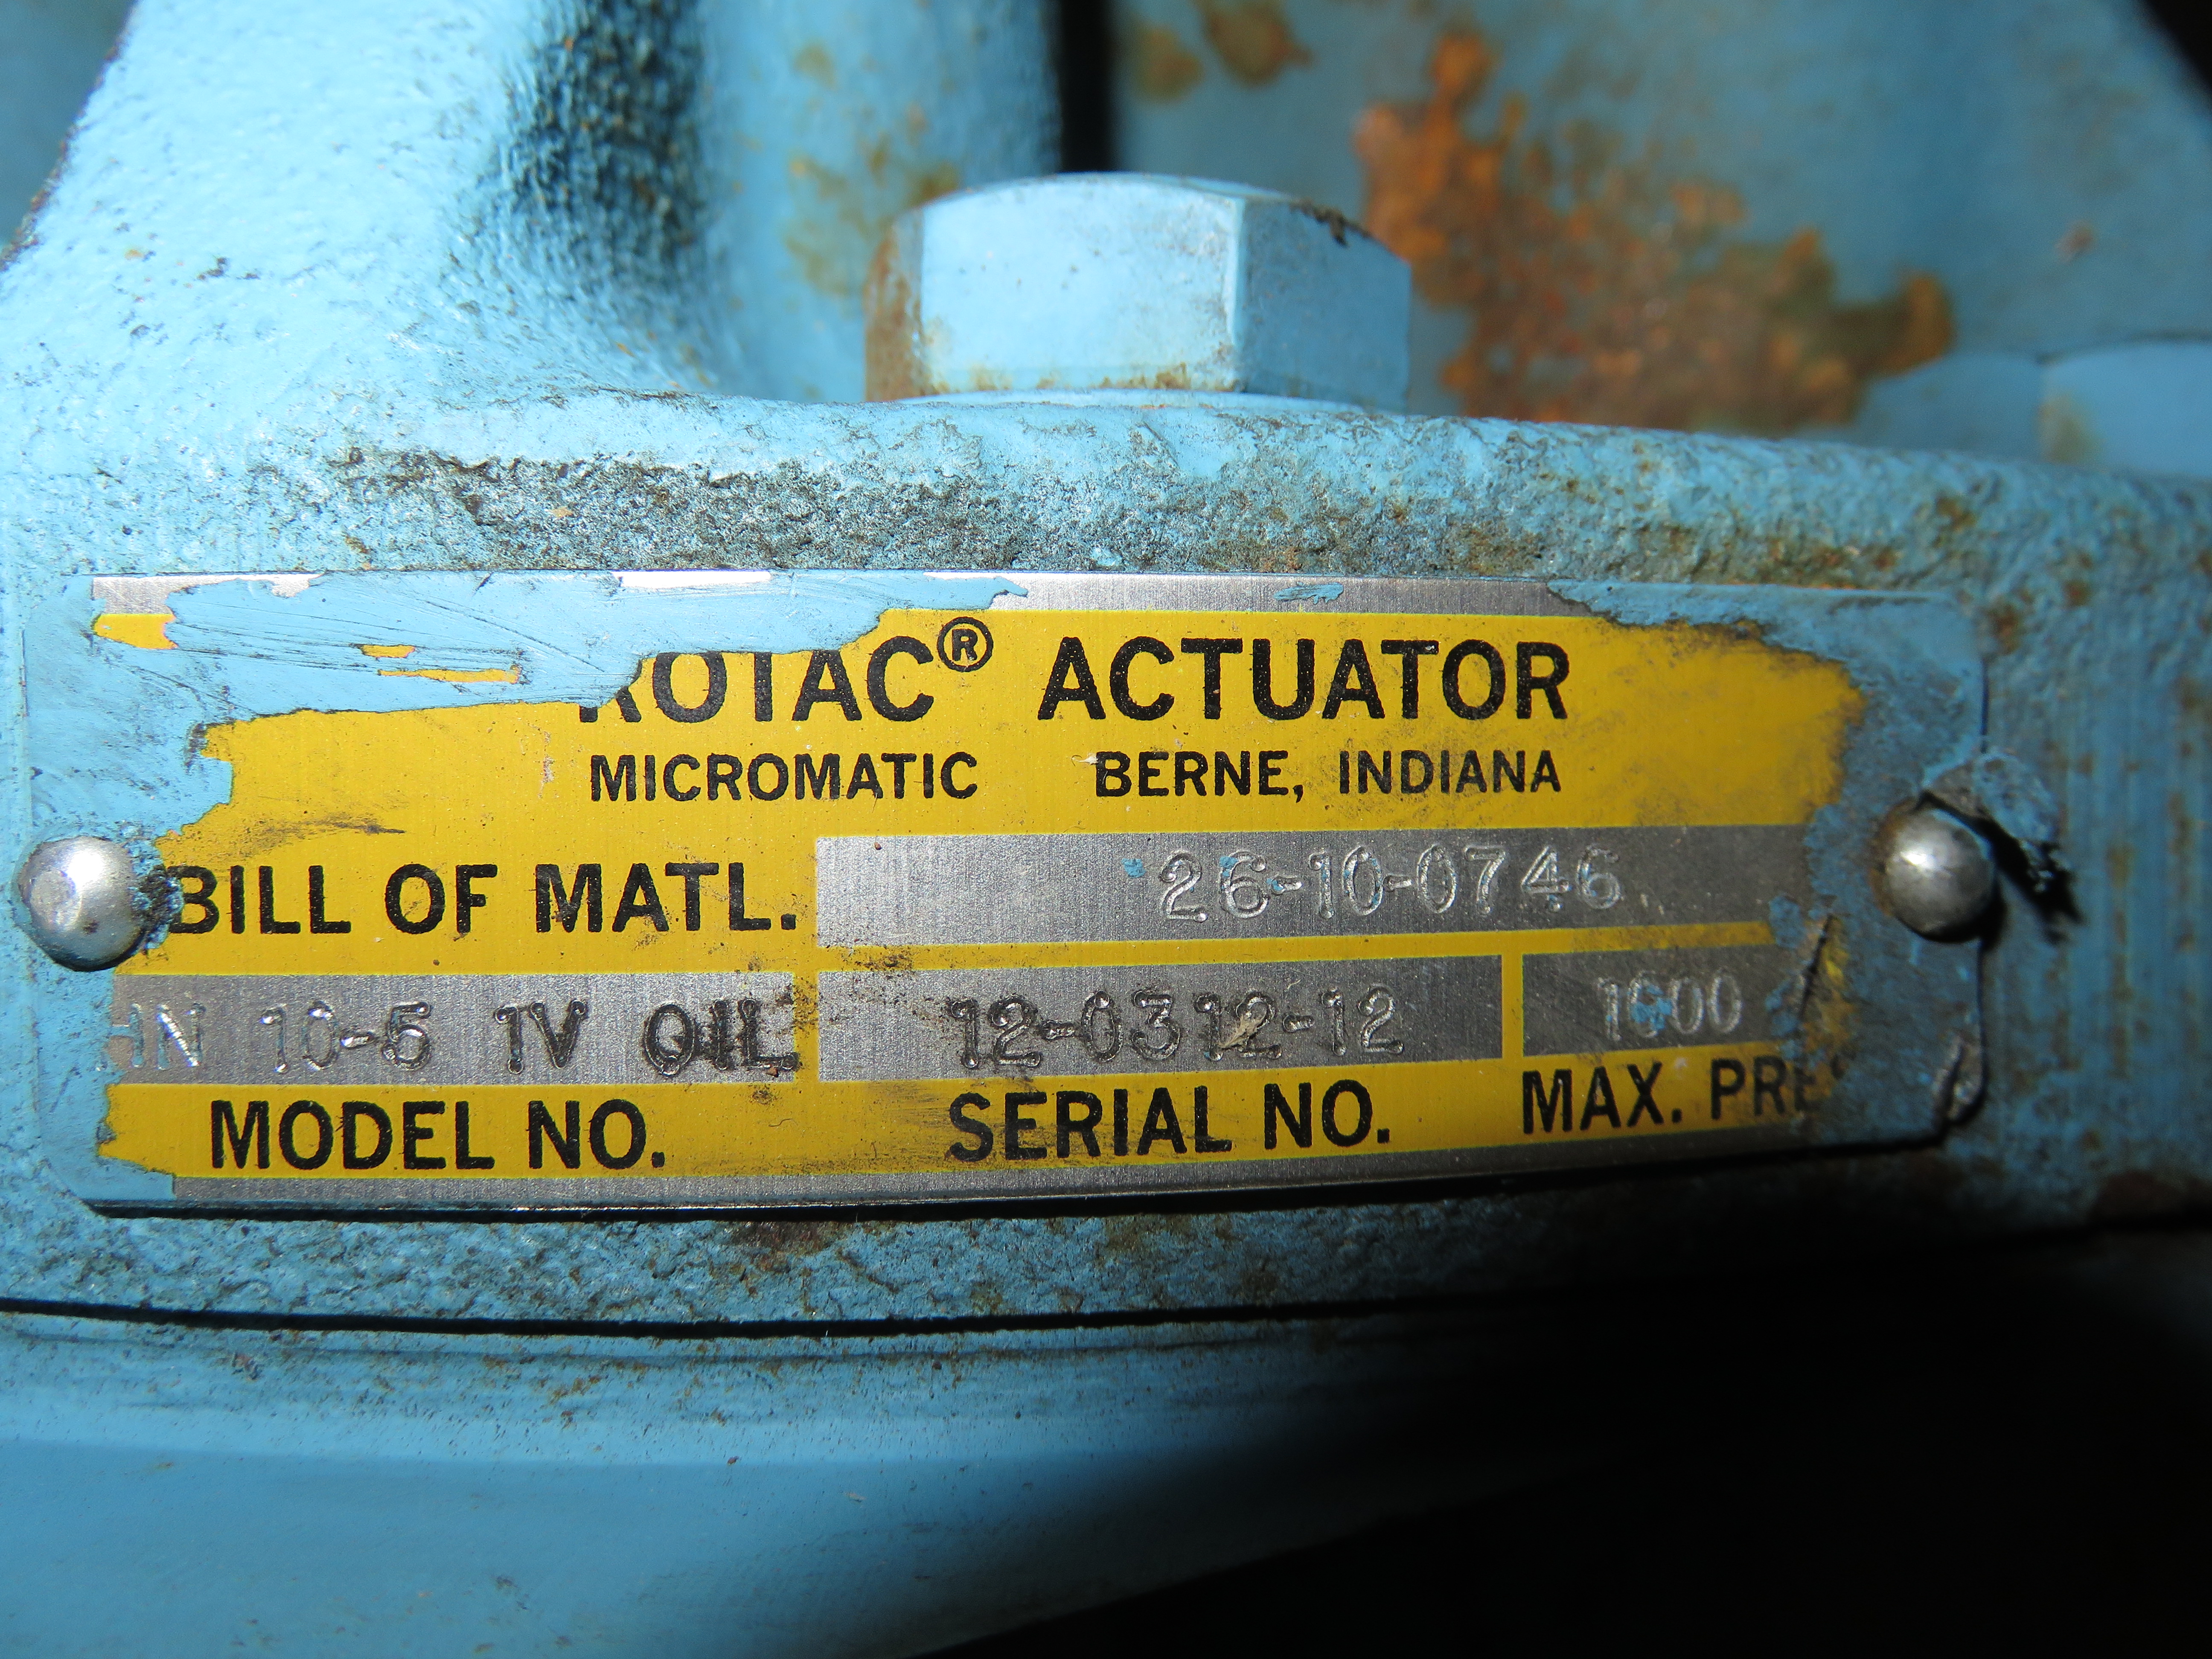 Micromatic Rotac Actuator Model HN 10-5 IV OIL